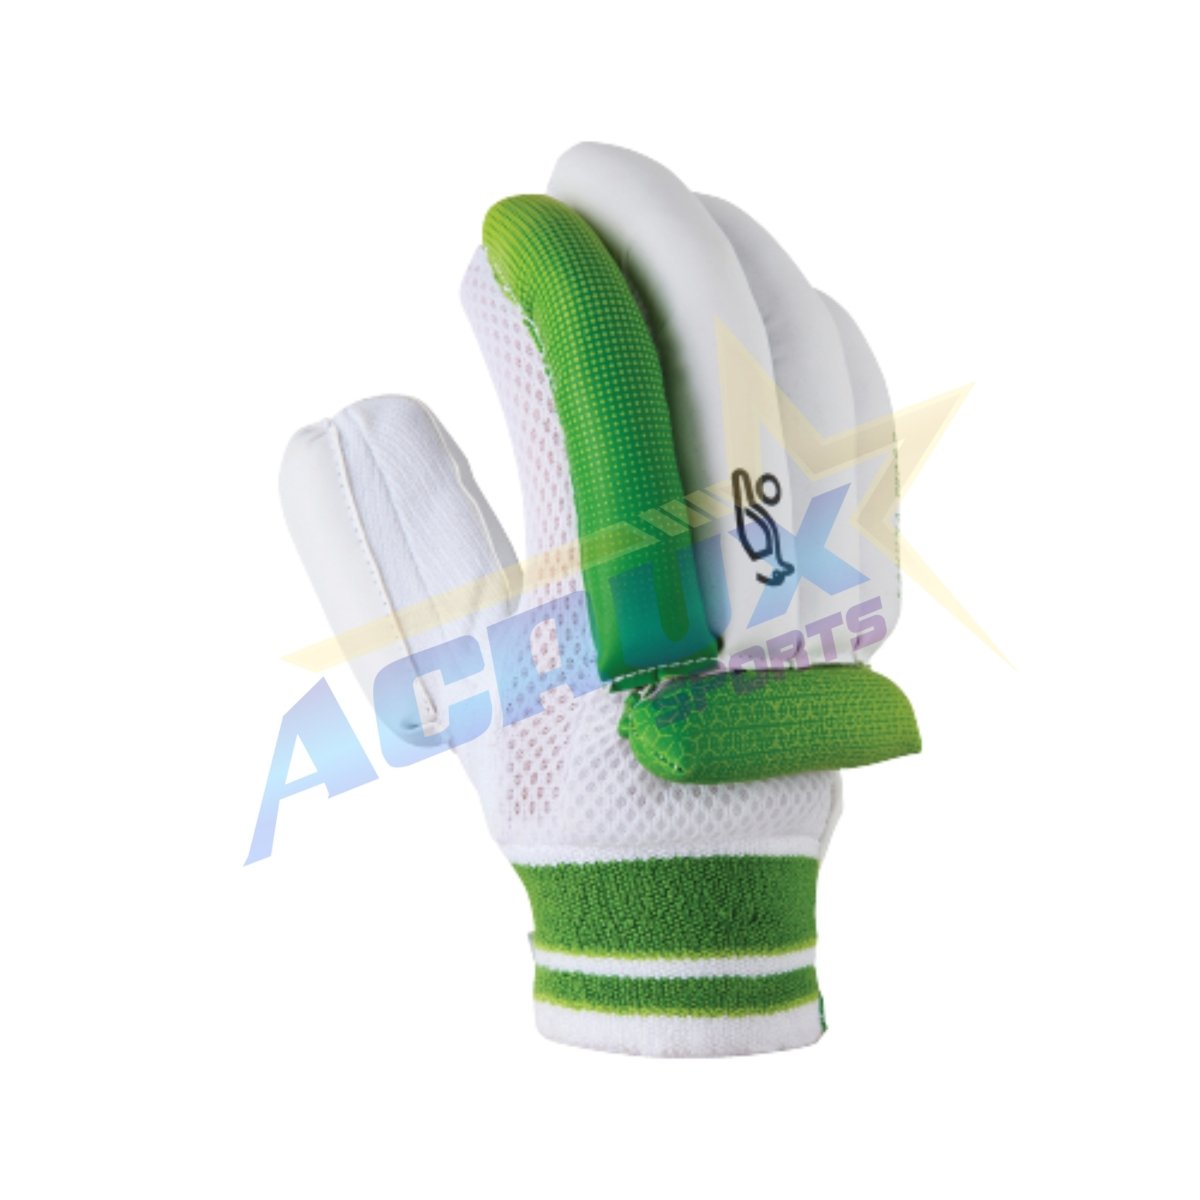 Kookaburra Kahuna Pro 9.0 Junior Cricket Batting Gloves